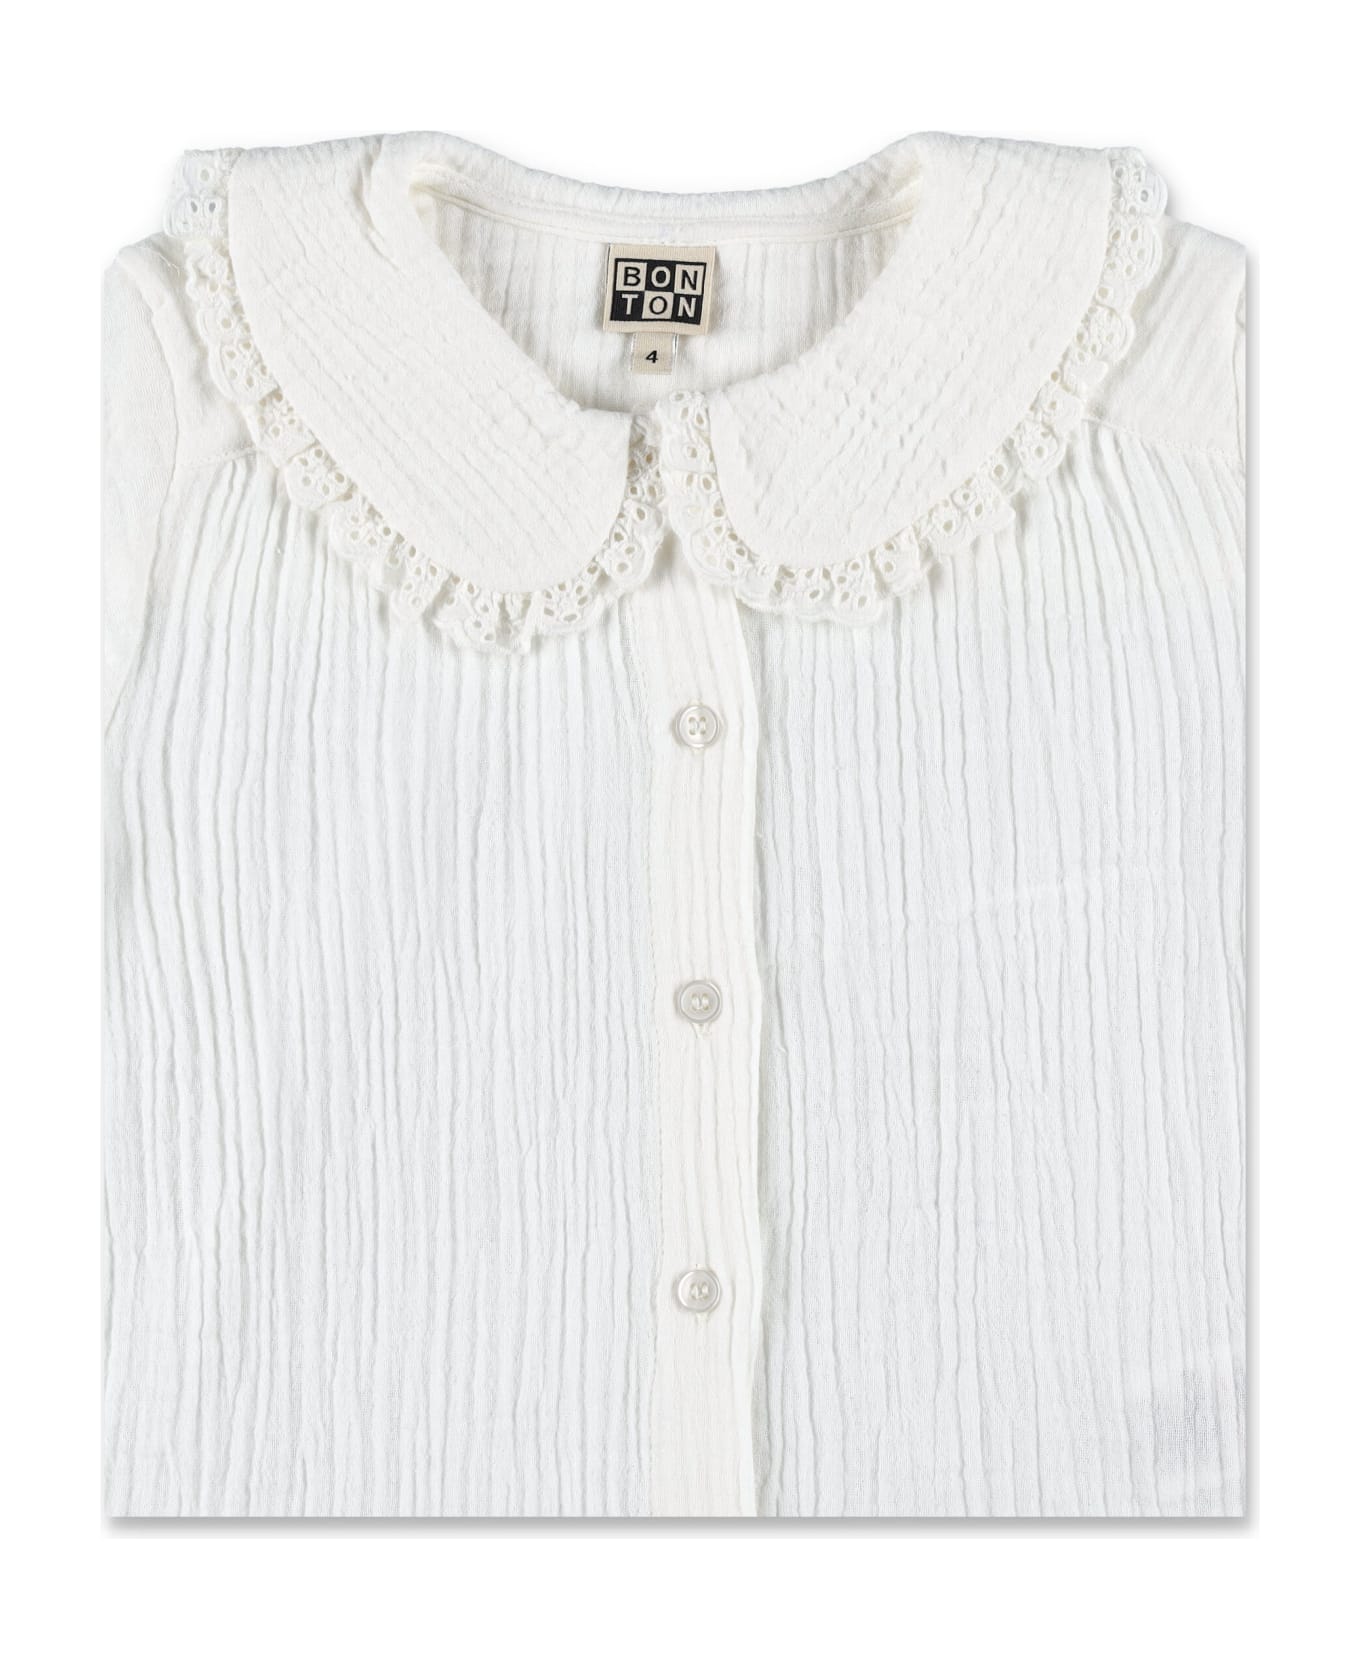 Bonton Shirt - WHITE